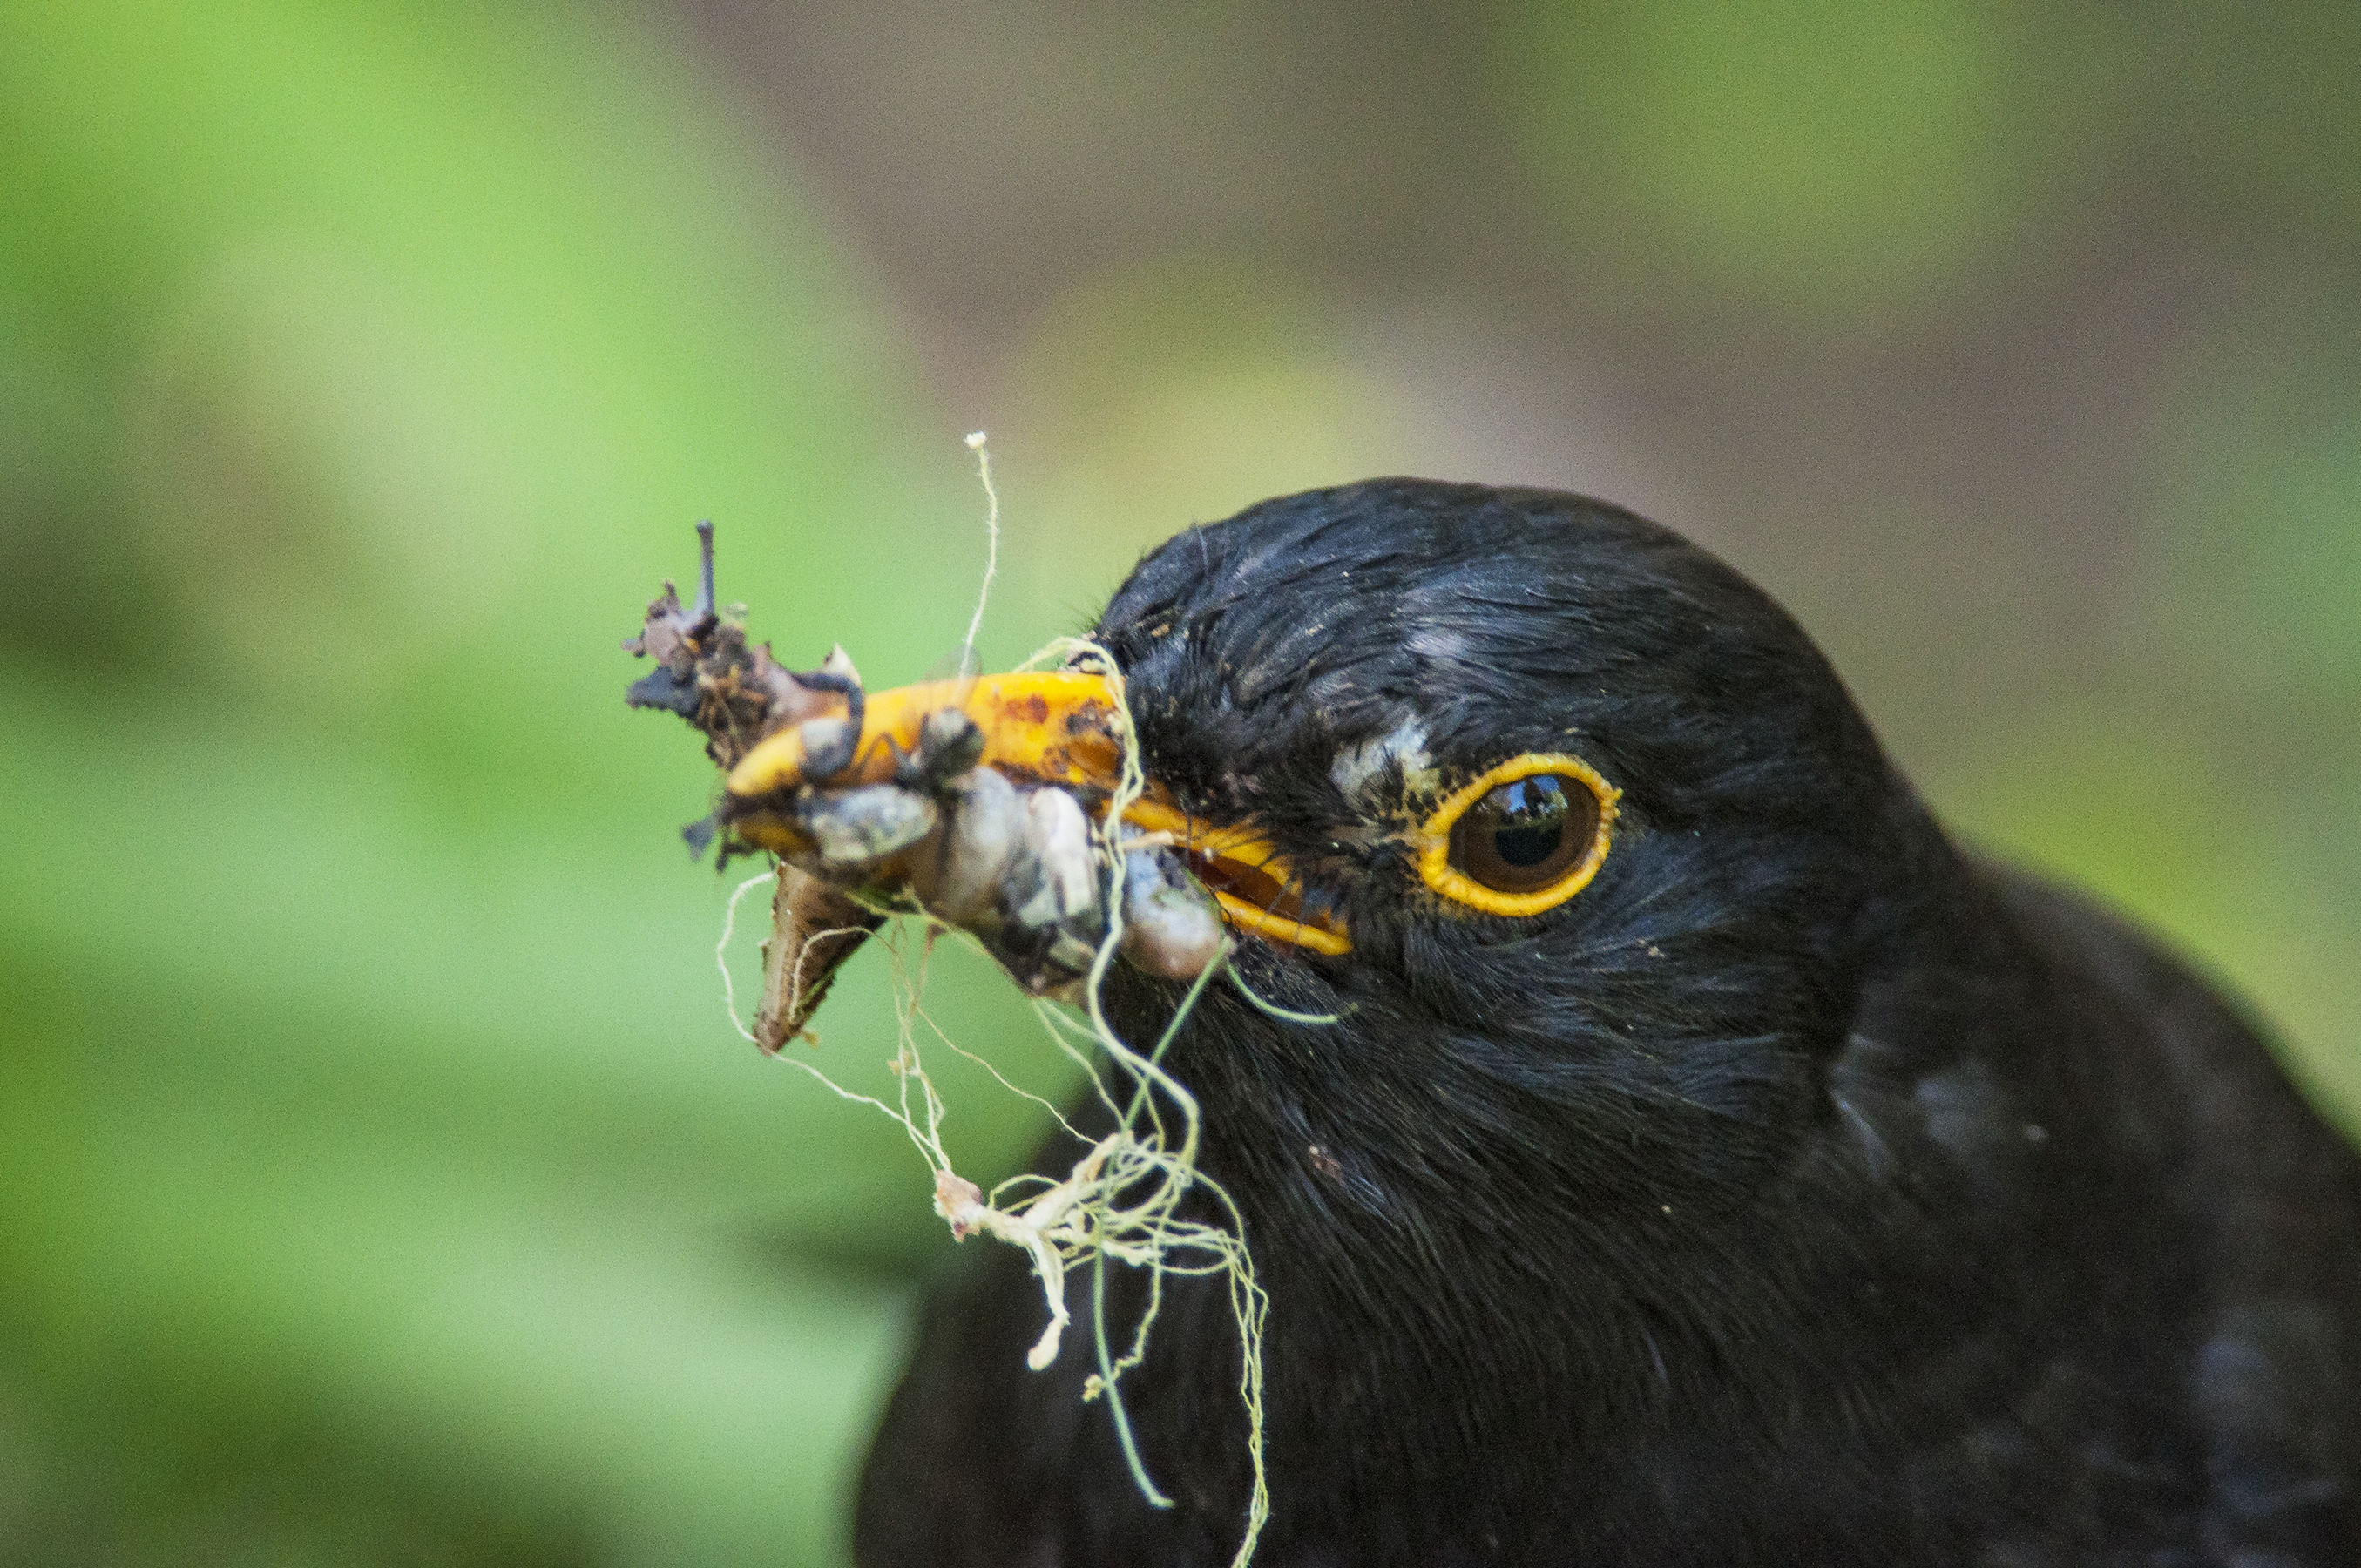 blackbird with lunch...